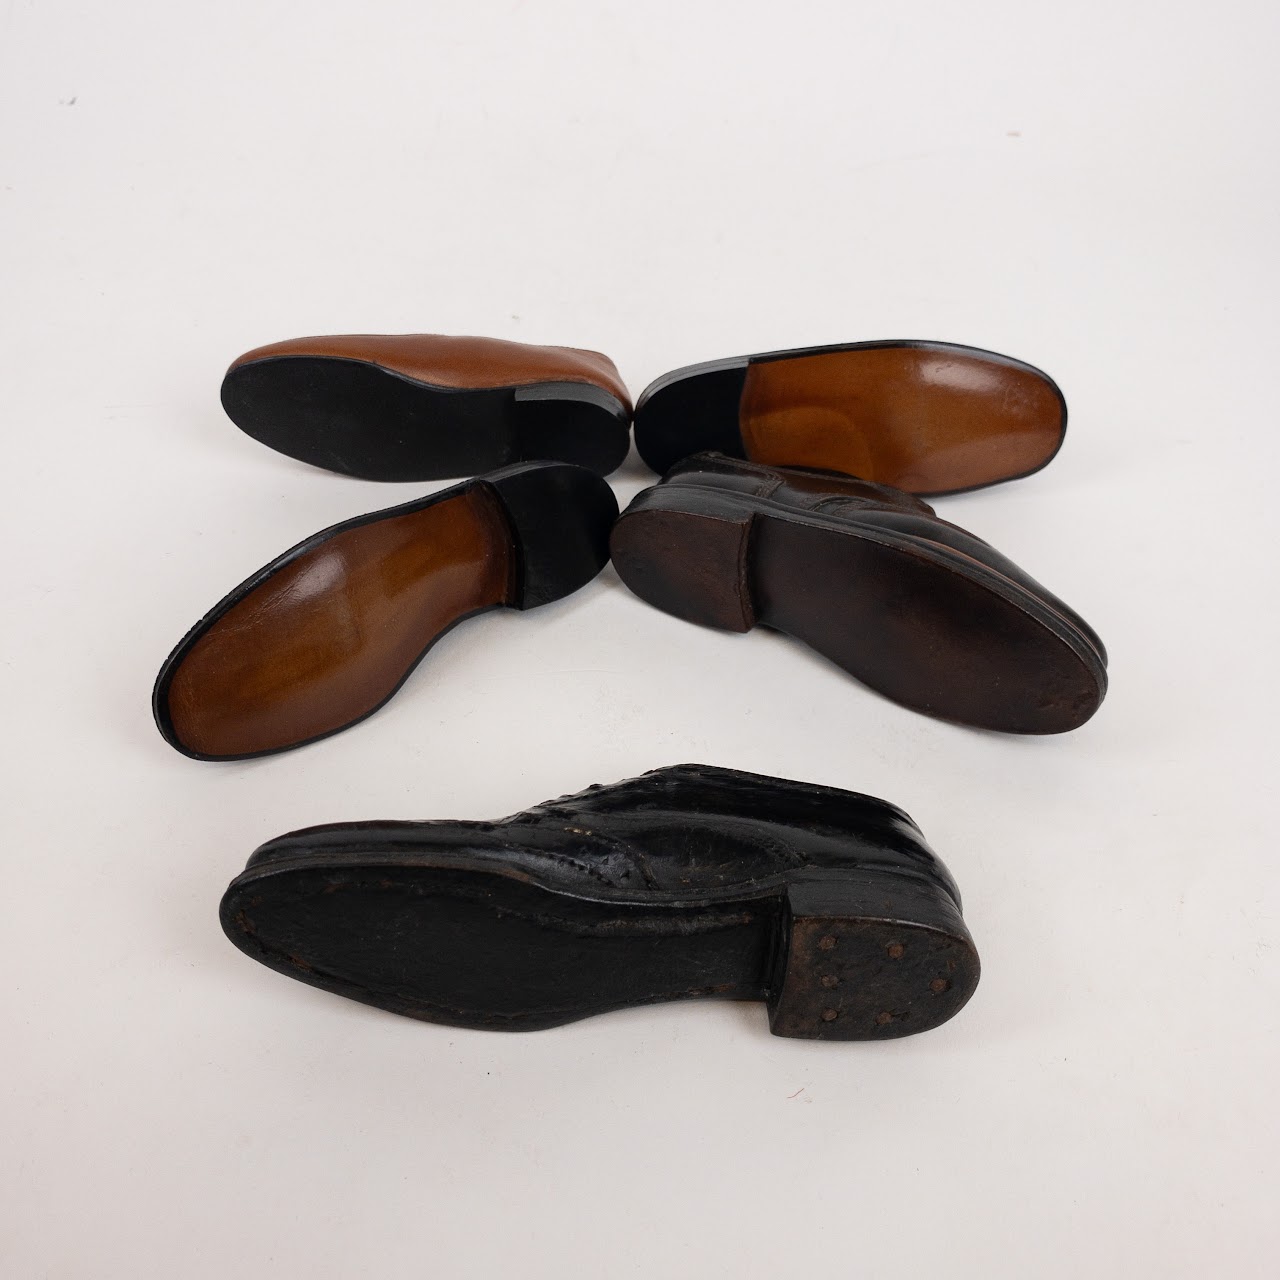 Miniature Shoe Vintage Salesman Sample Lot